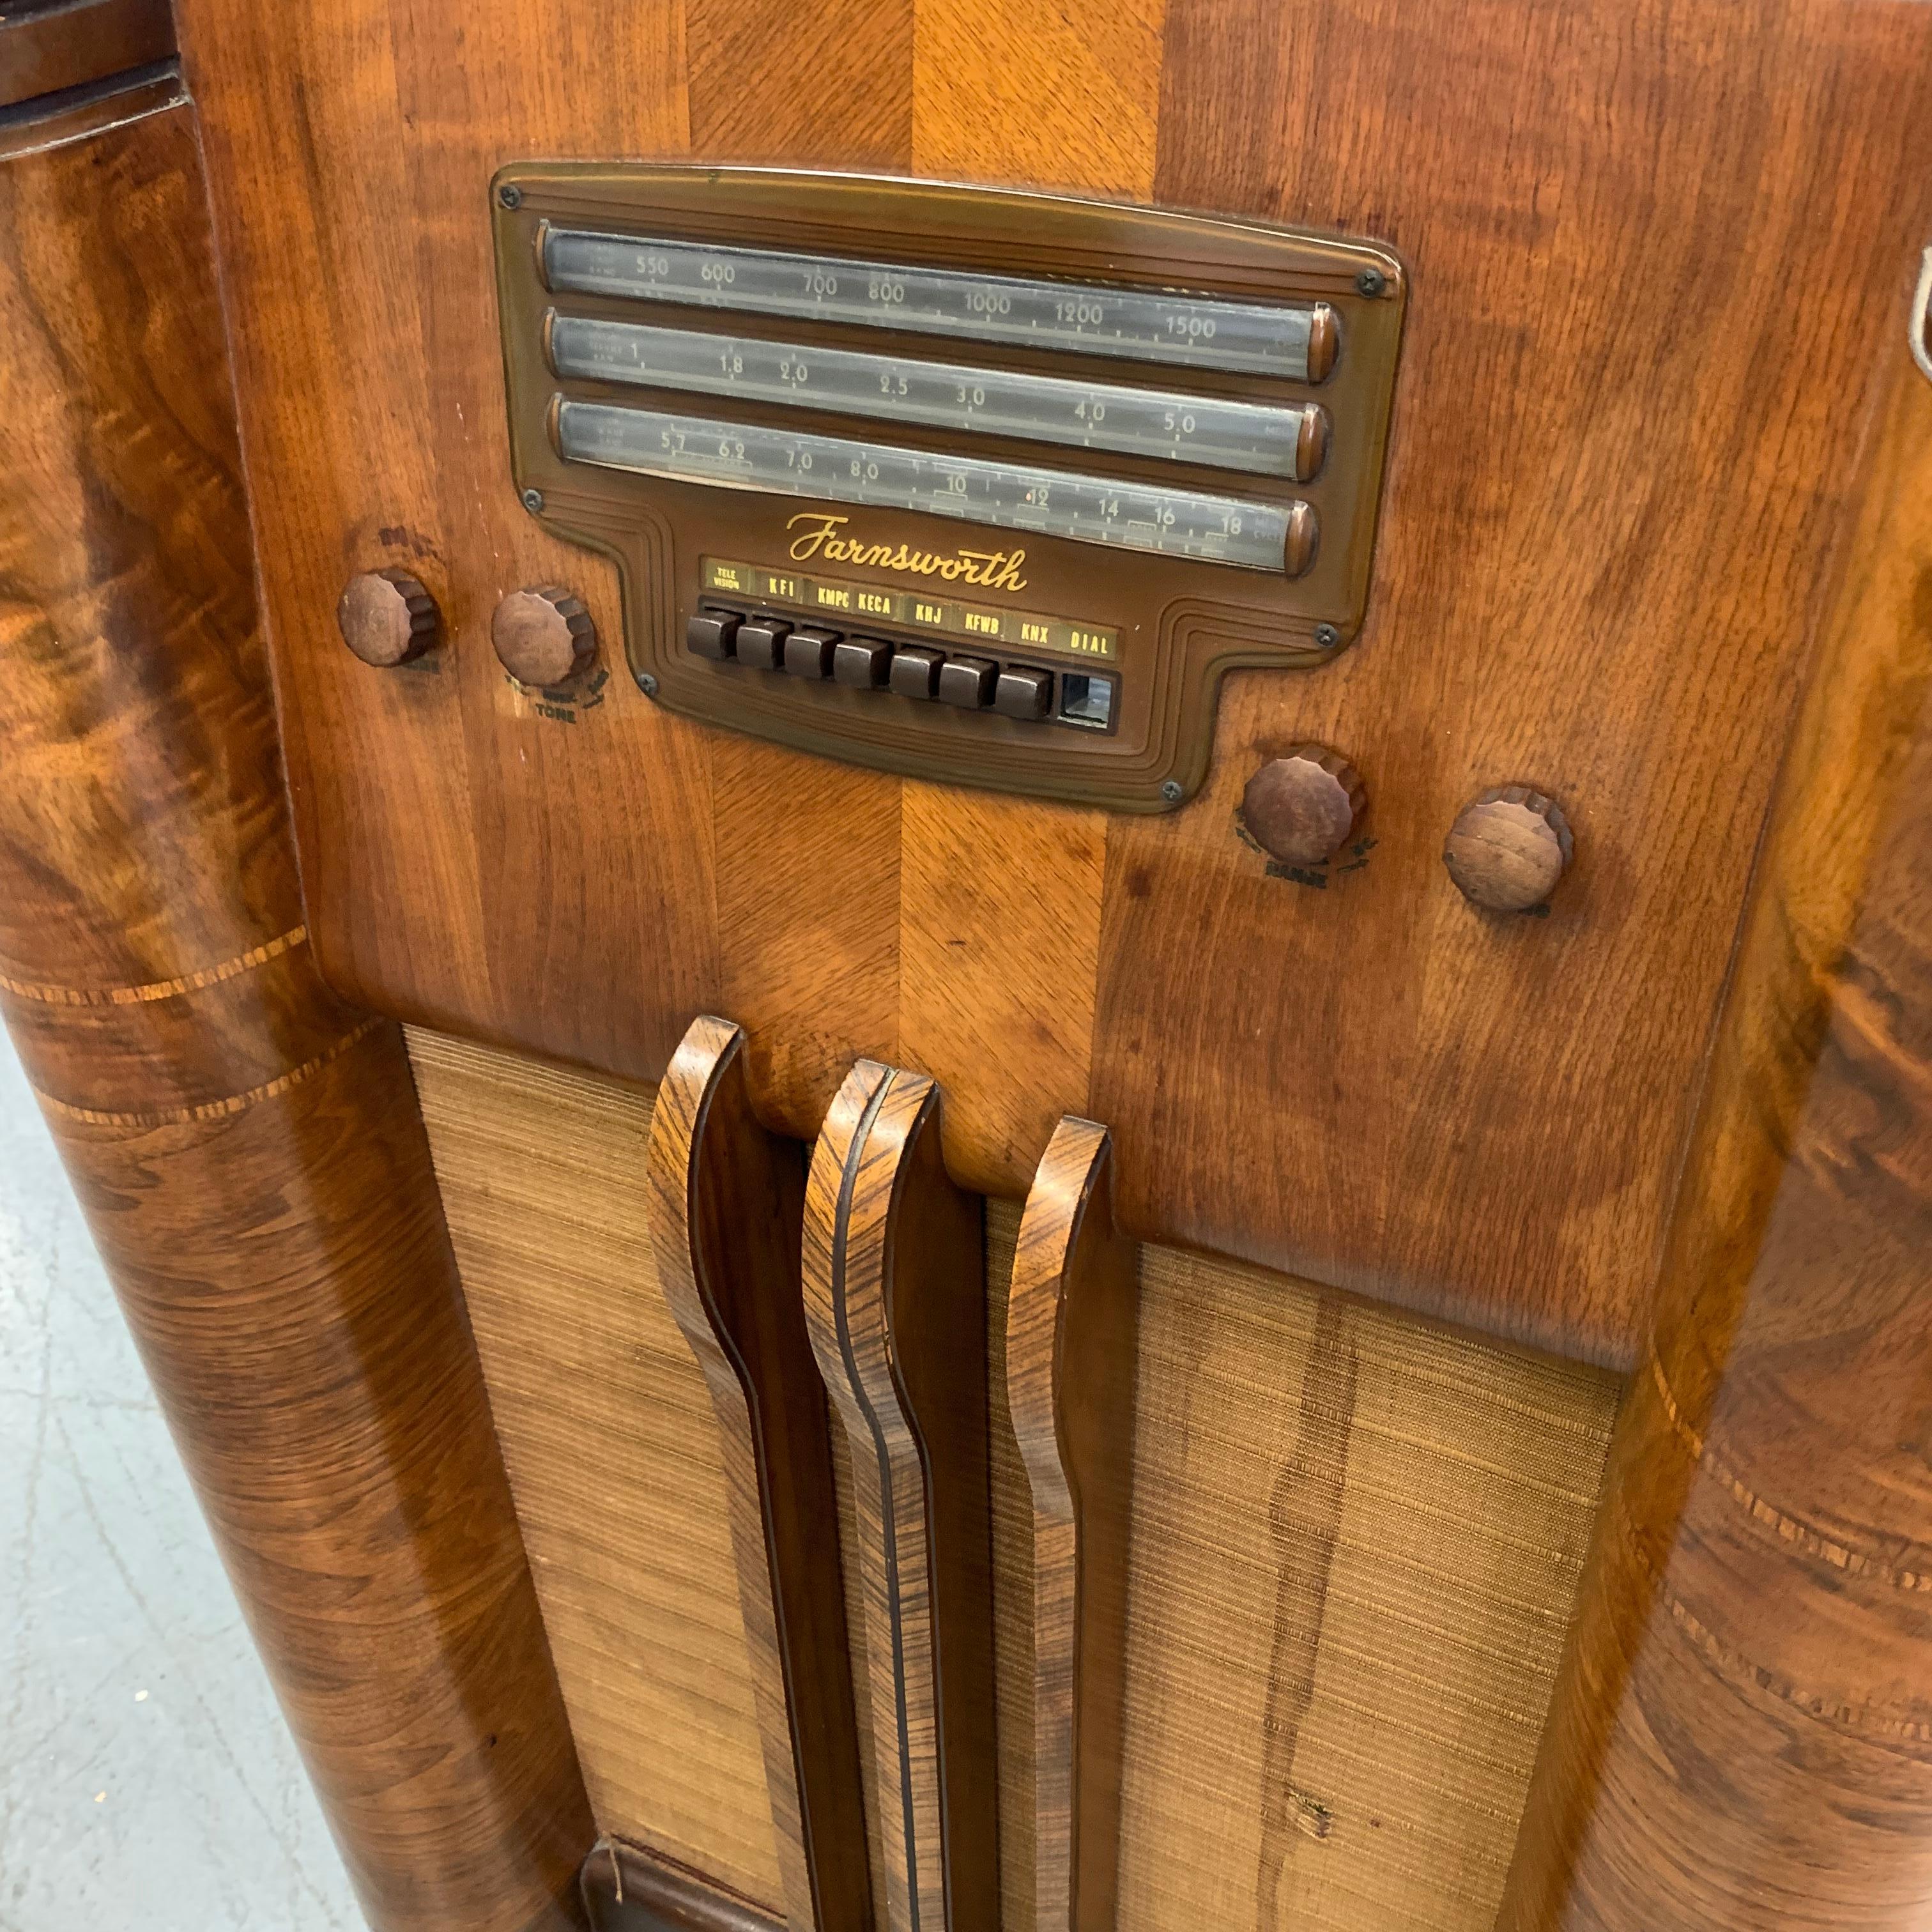 19th Century Vintage Floor Radio by Farnsworth Television and Radio Corp